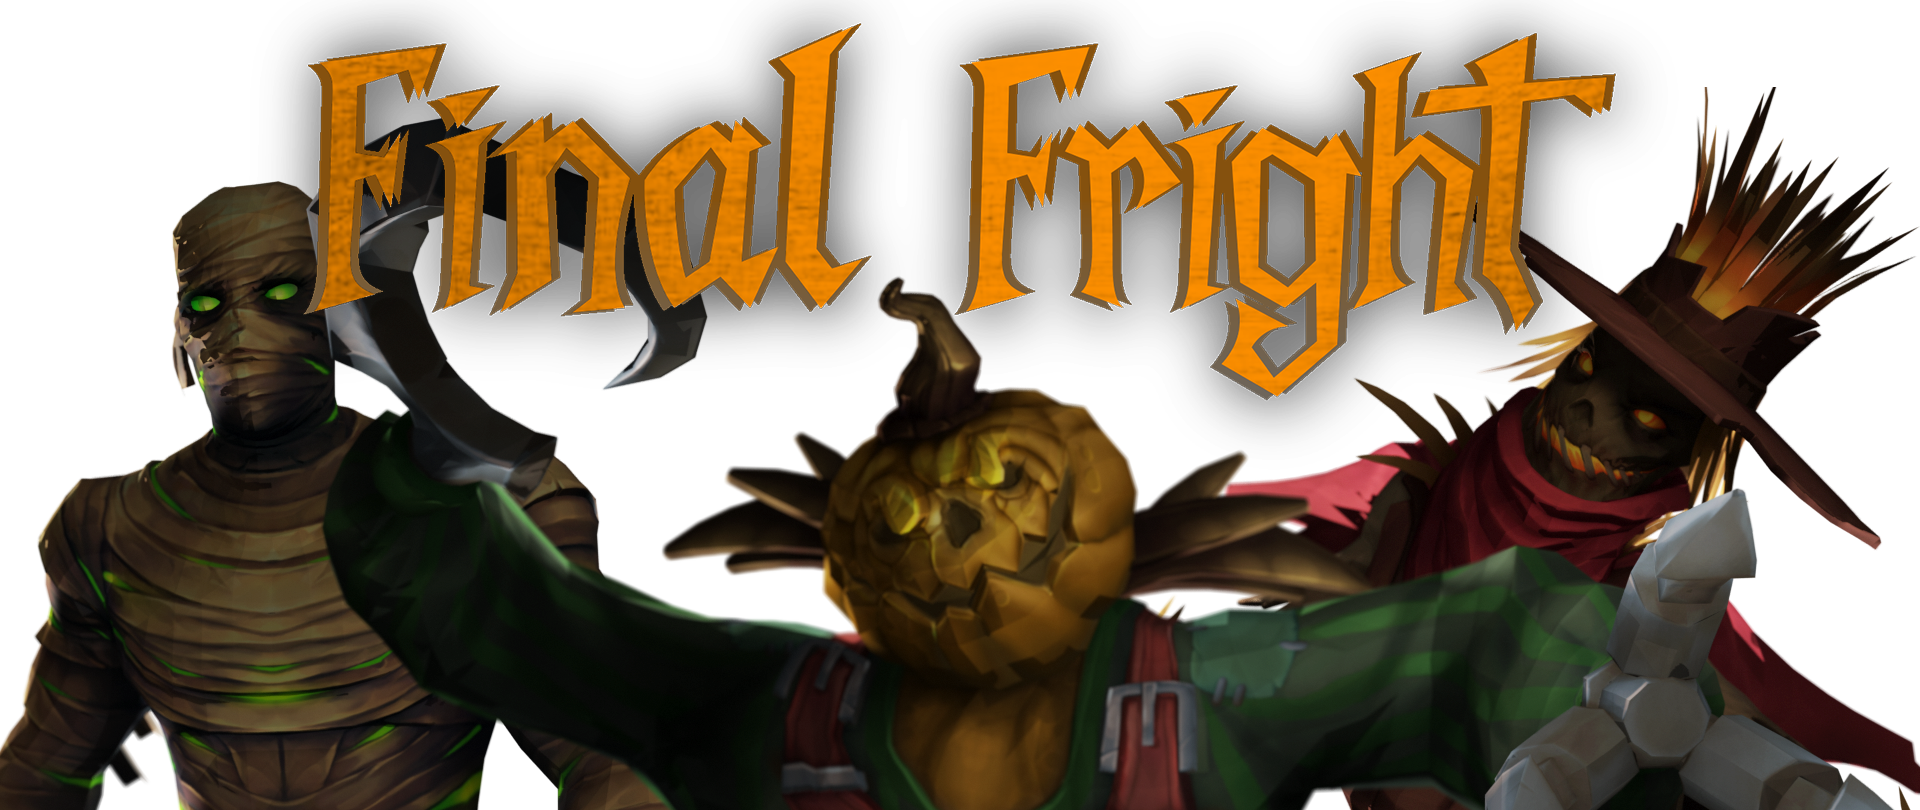 Final Fright